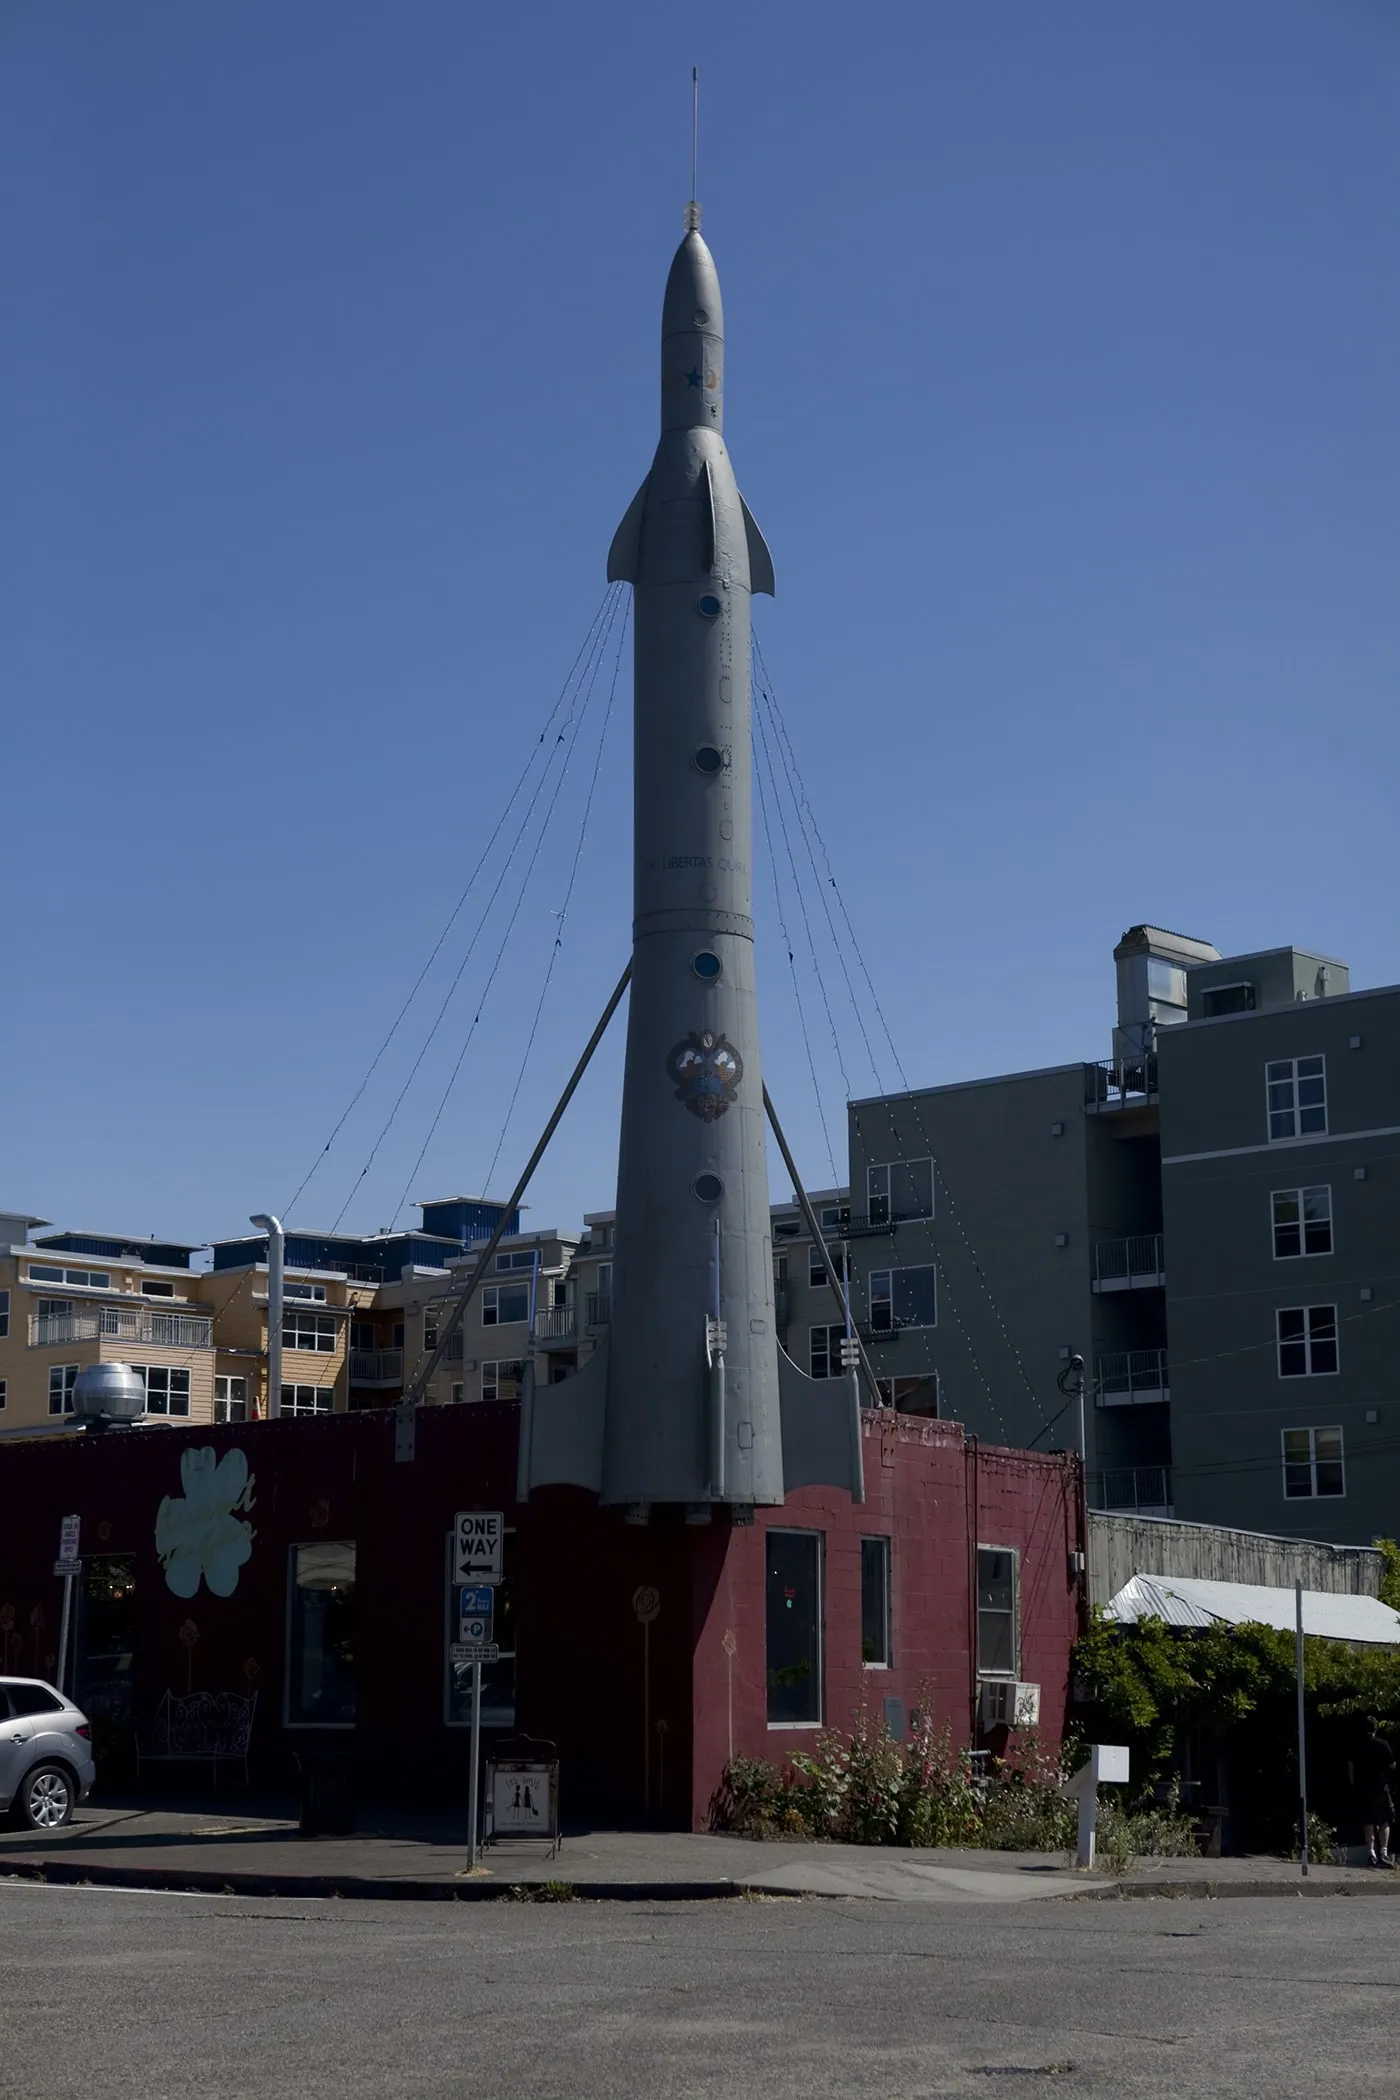 The Fremont Rocket, a roadside attraction in Seattle, Washington.